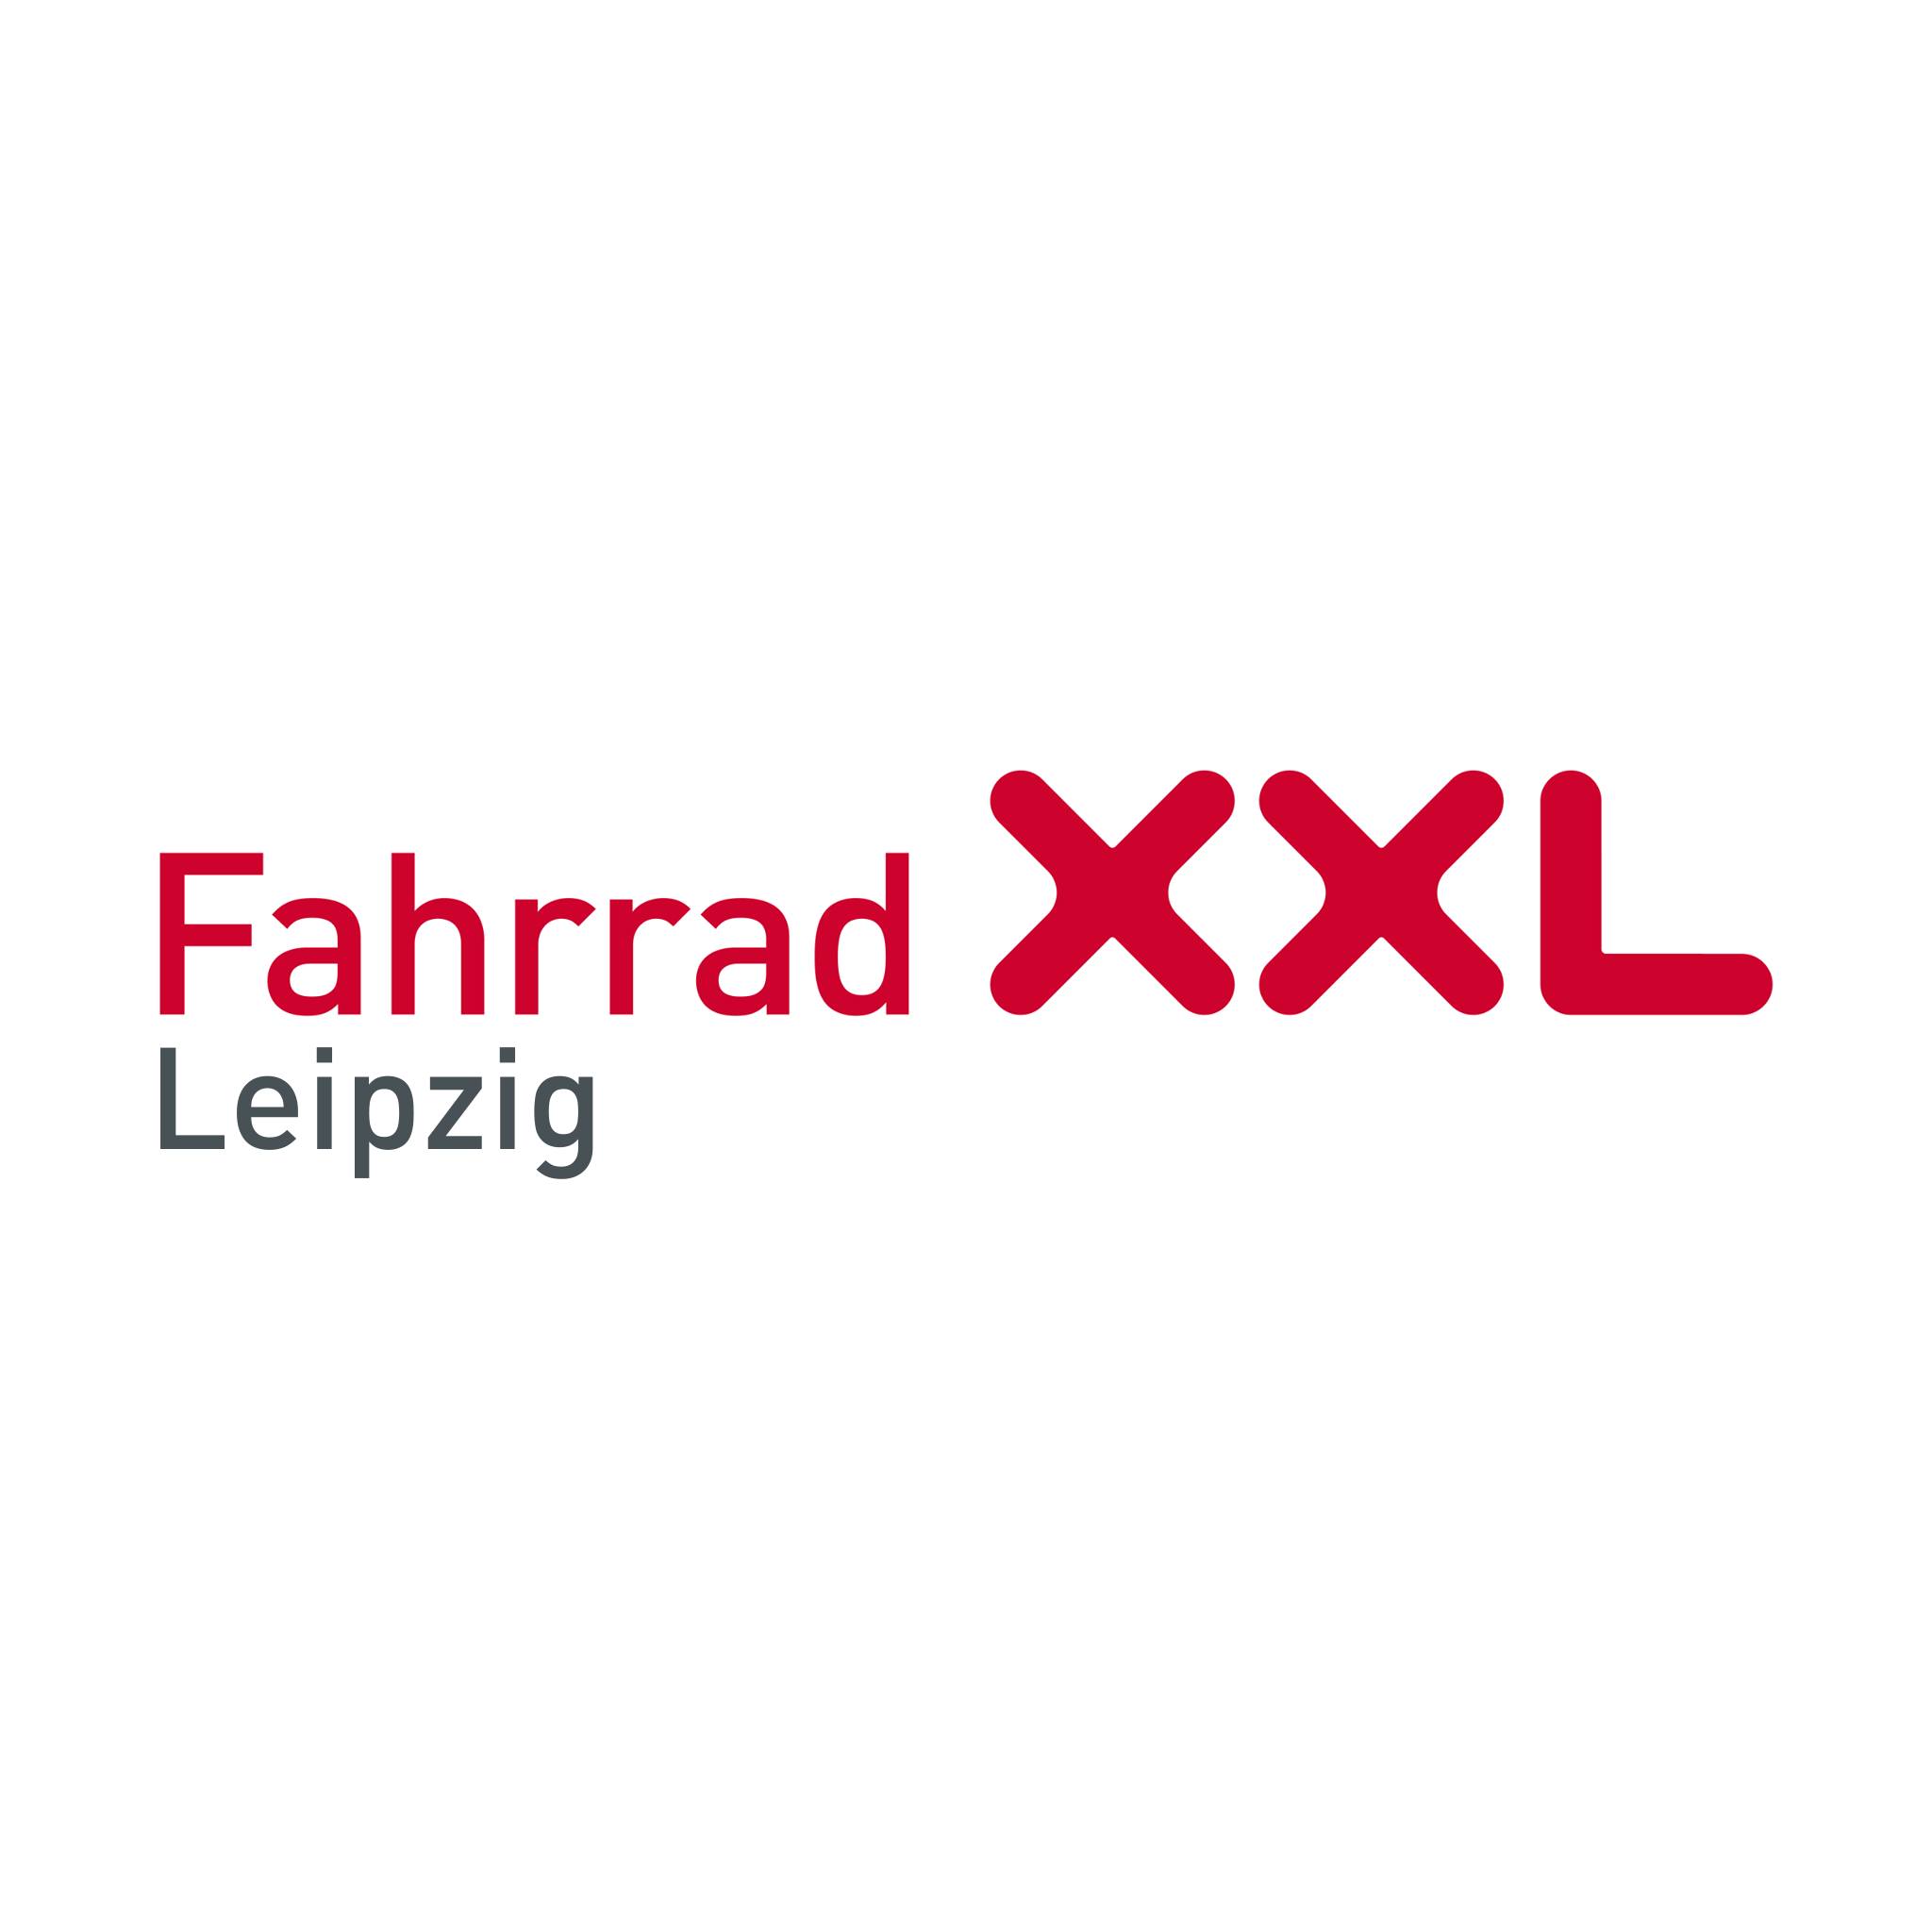 Fahrrad XXL Emporon GmbH & Co. KG